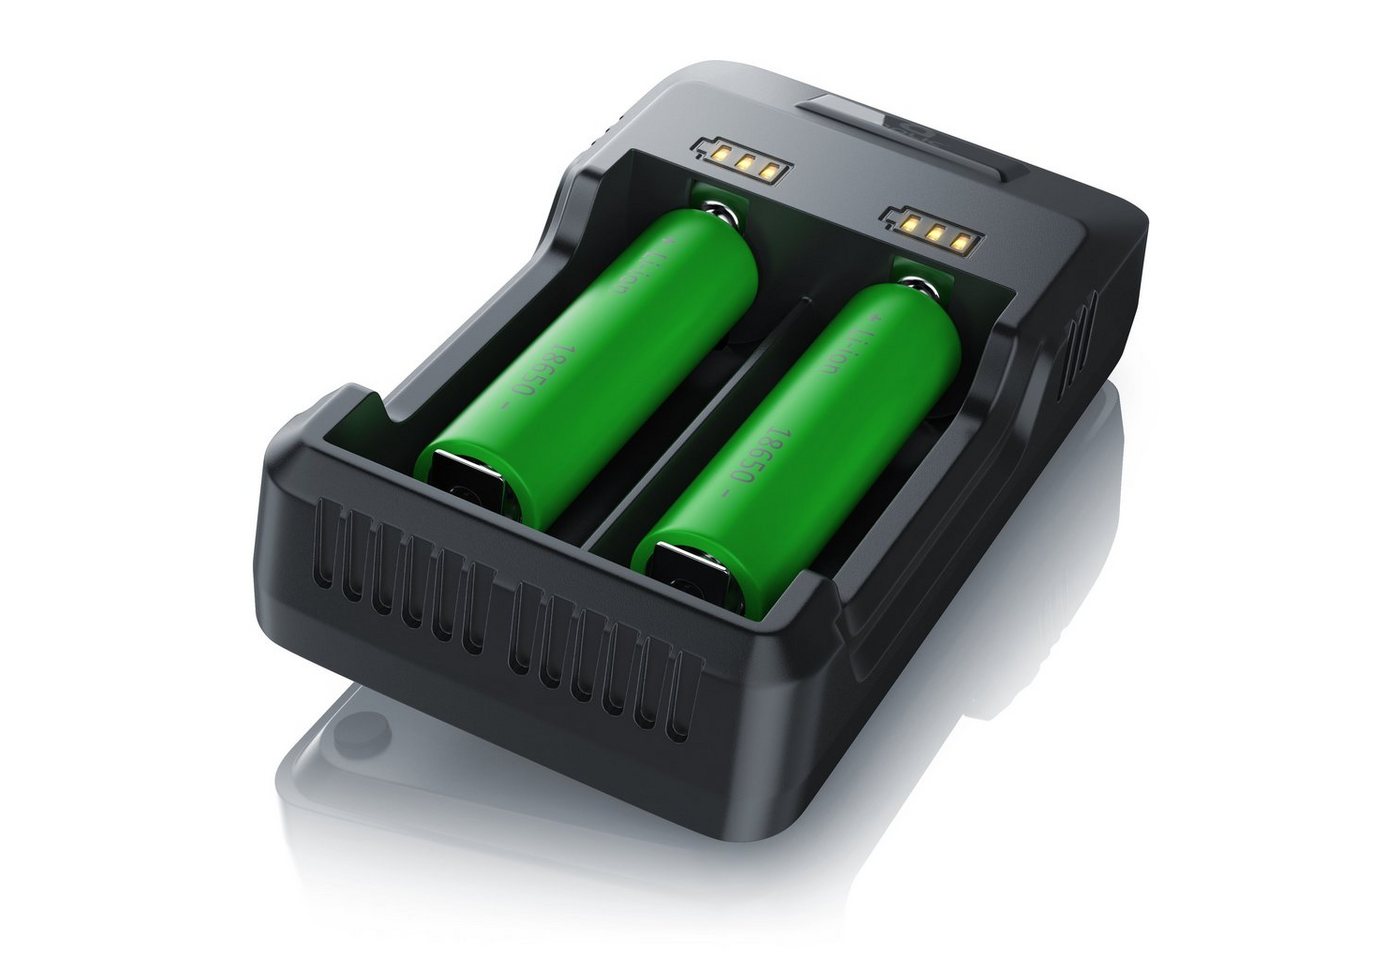 Aplic Batterie-Ladegerät (2000 mA, USB Akku Lader mit zwei Steckplätzen für Ni-MH / Ni-Cd / Li-ion Akkus) von Aplic